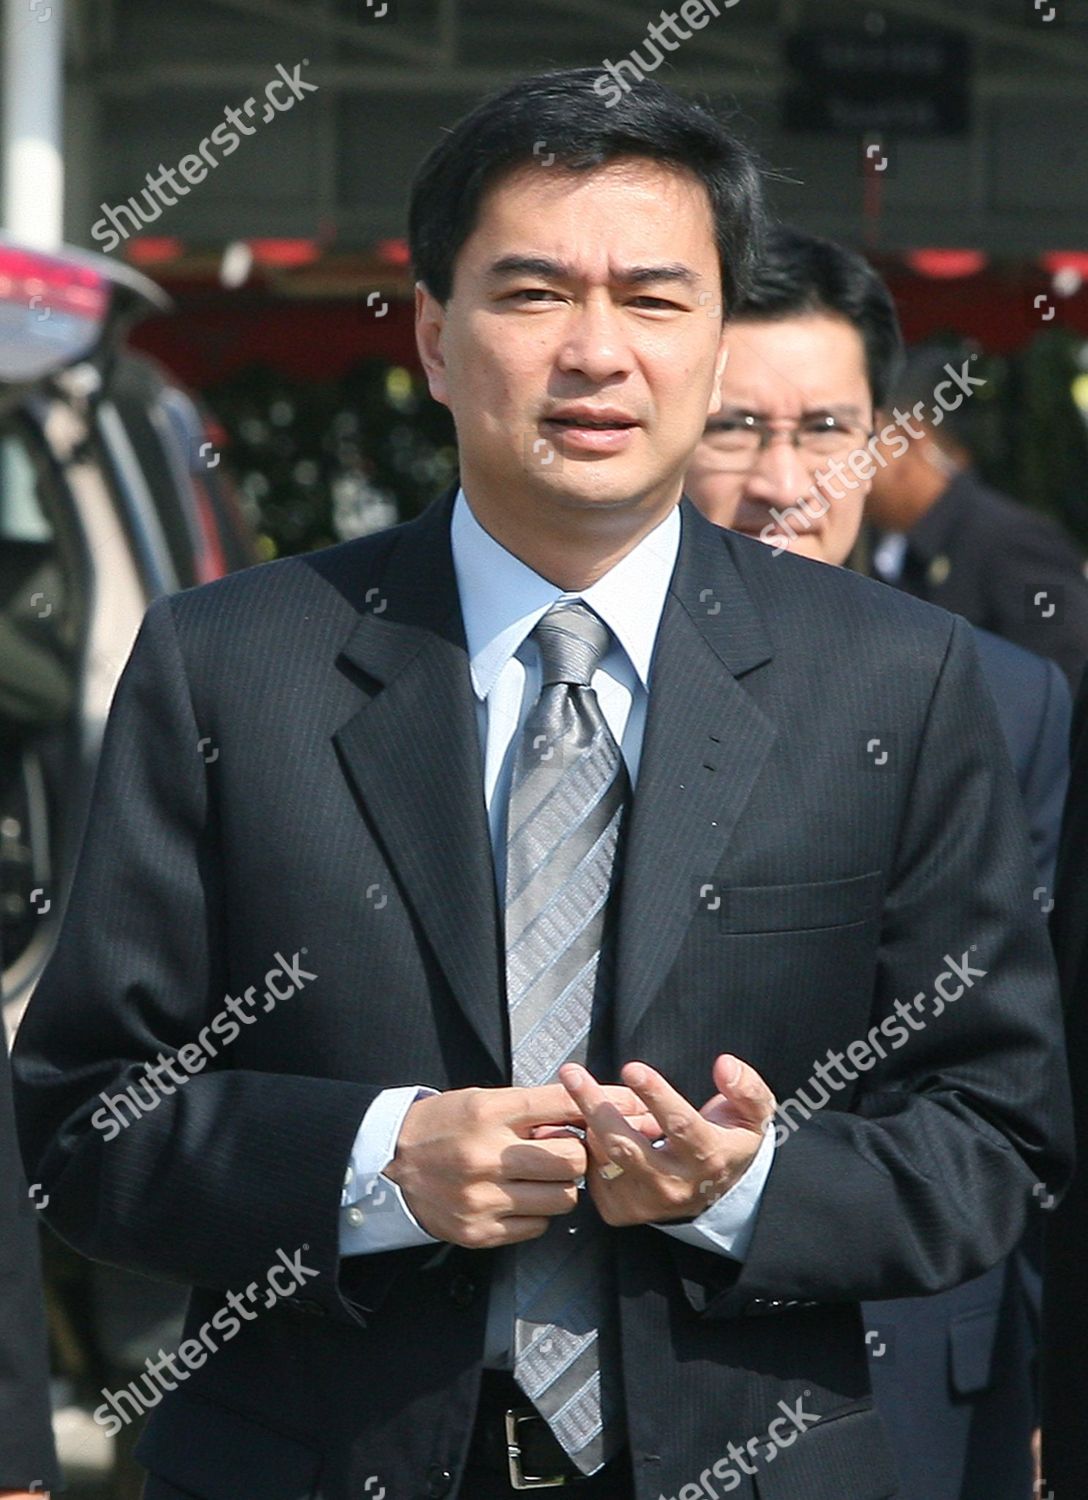 thailand-politics-abhisit-apr-2010-shutterstock-editorial-7623184j.jpg